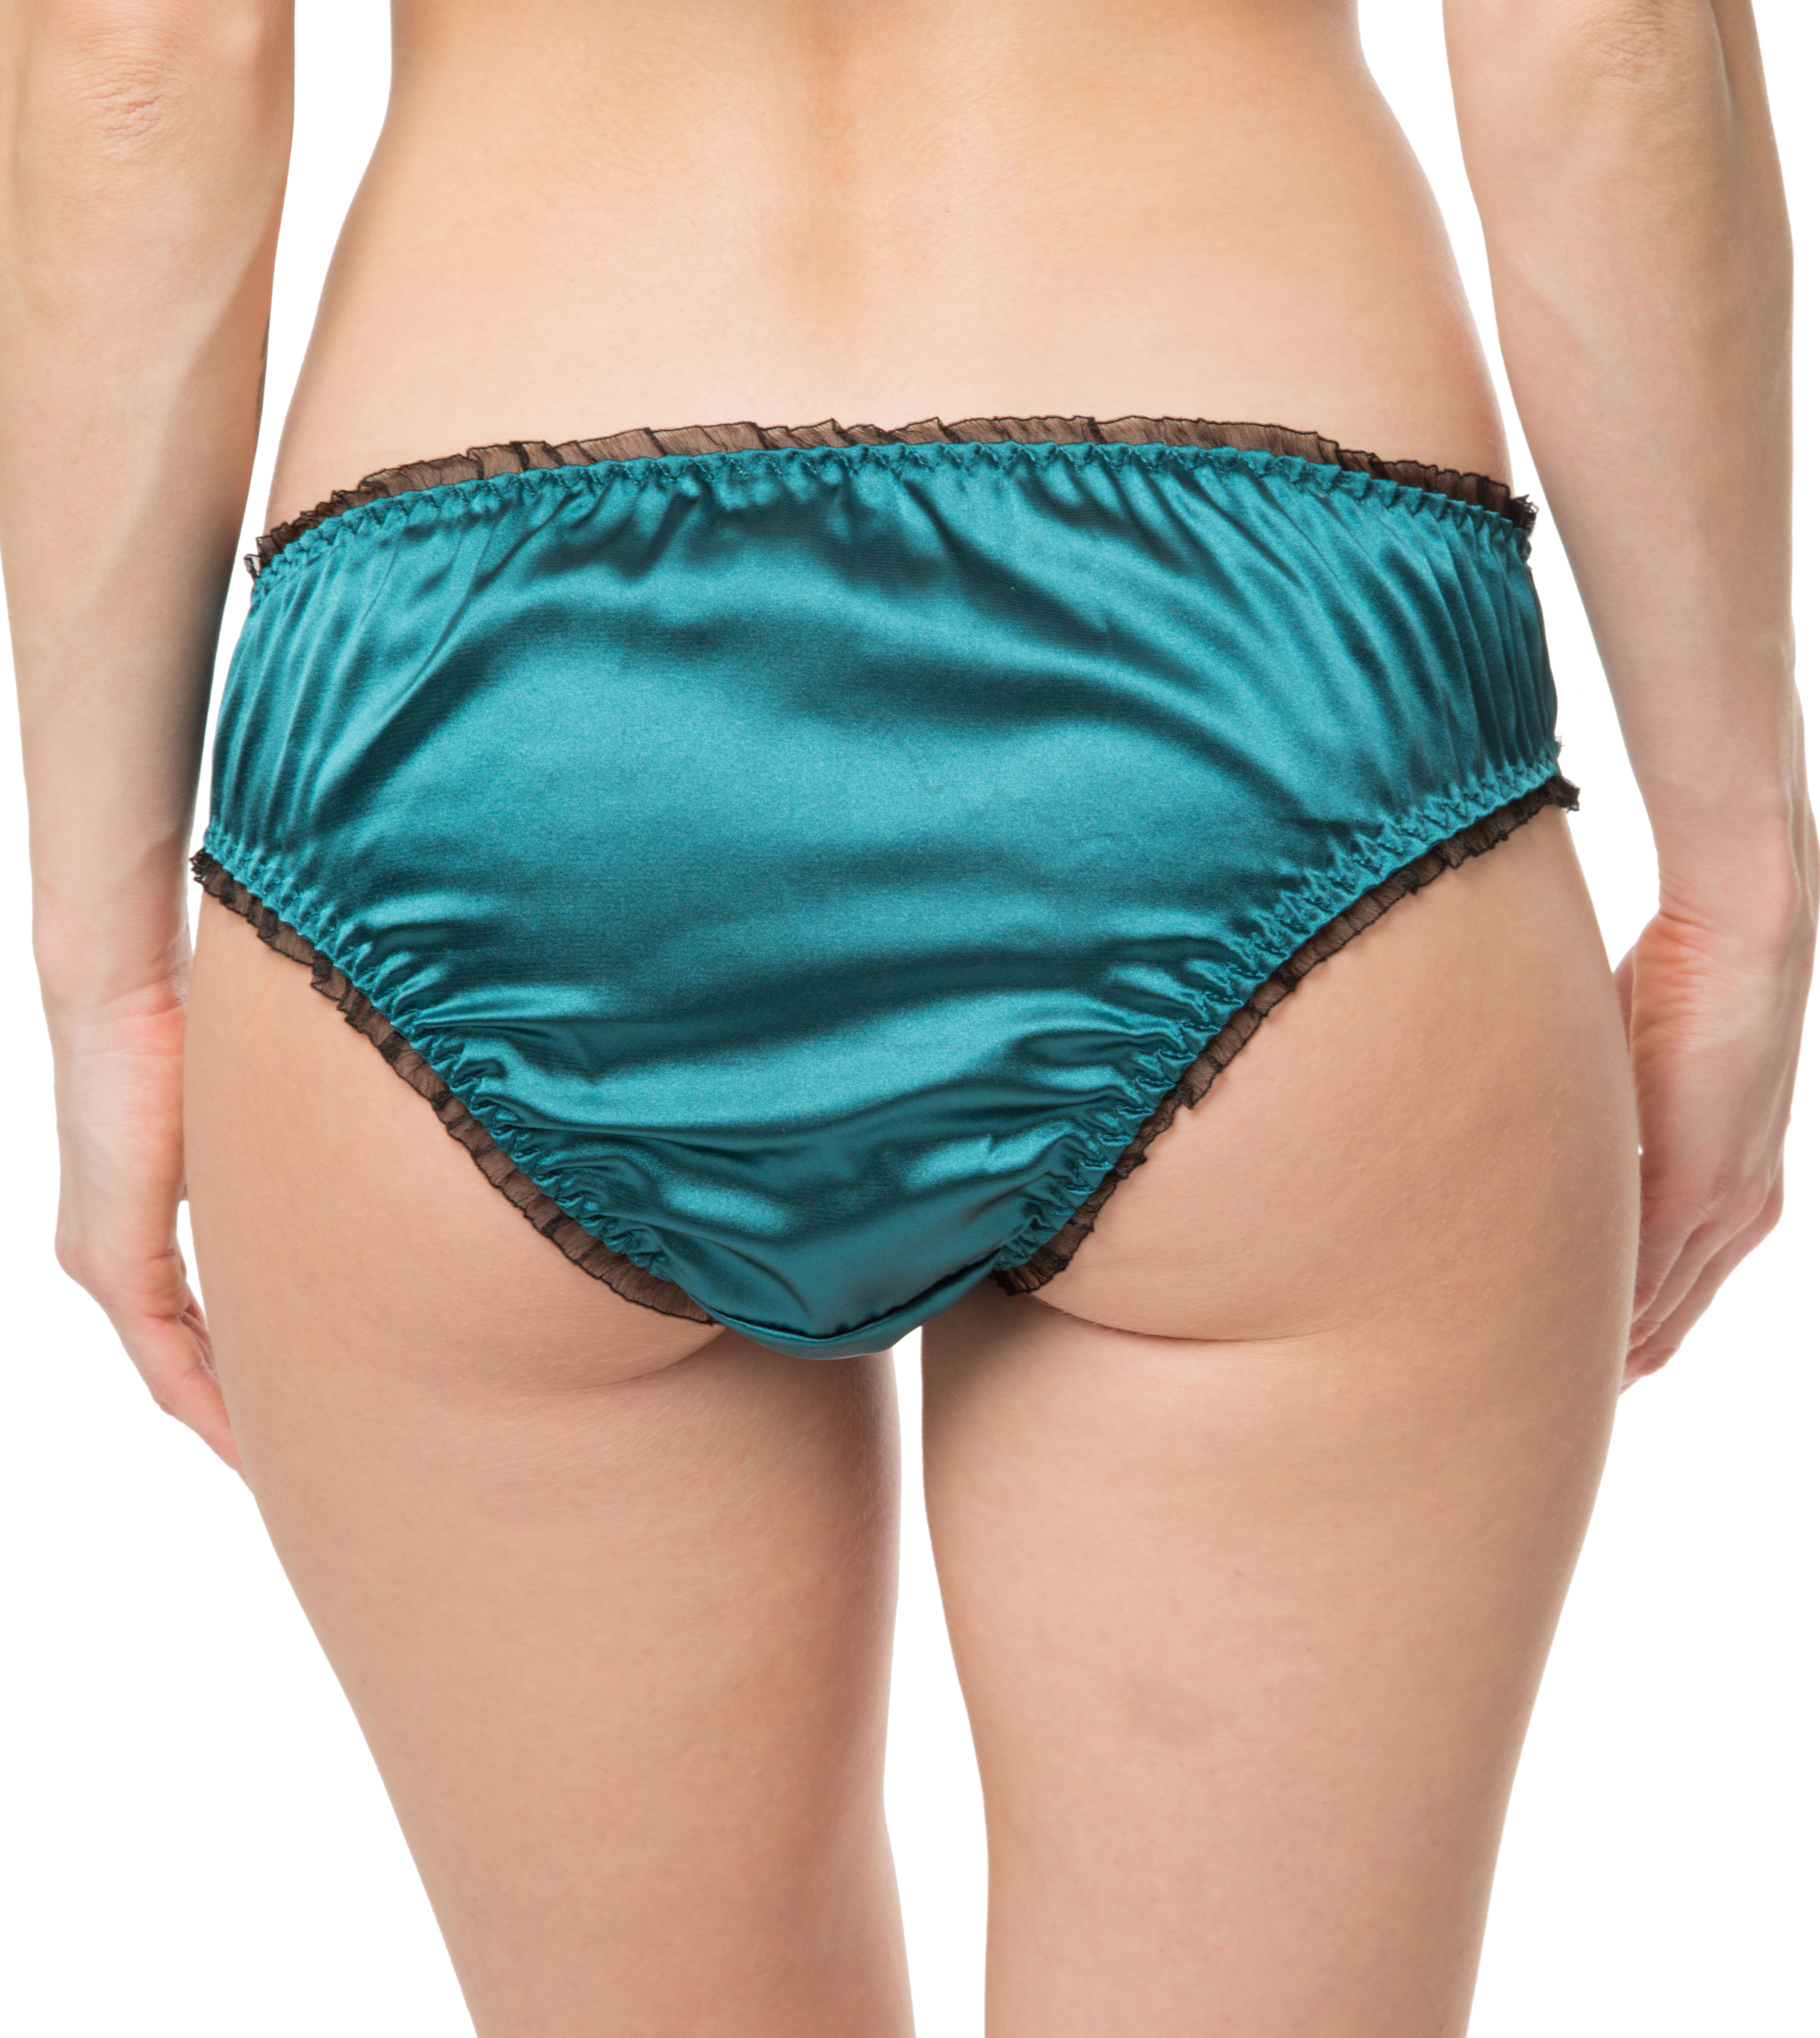 Teal Green Satin Frilly Sissy Panties Bikini Knicker Underwear